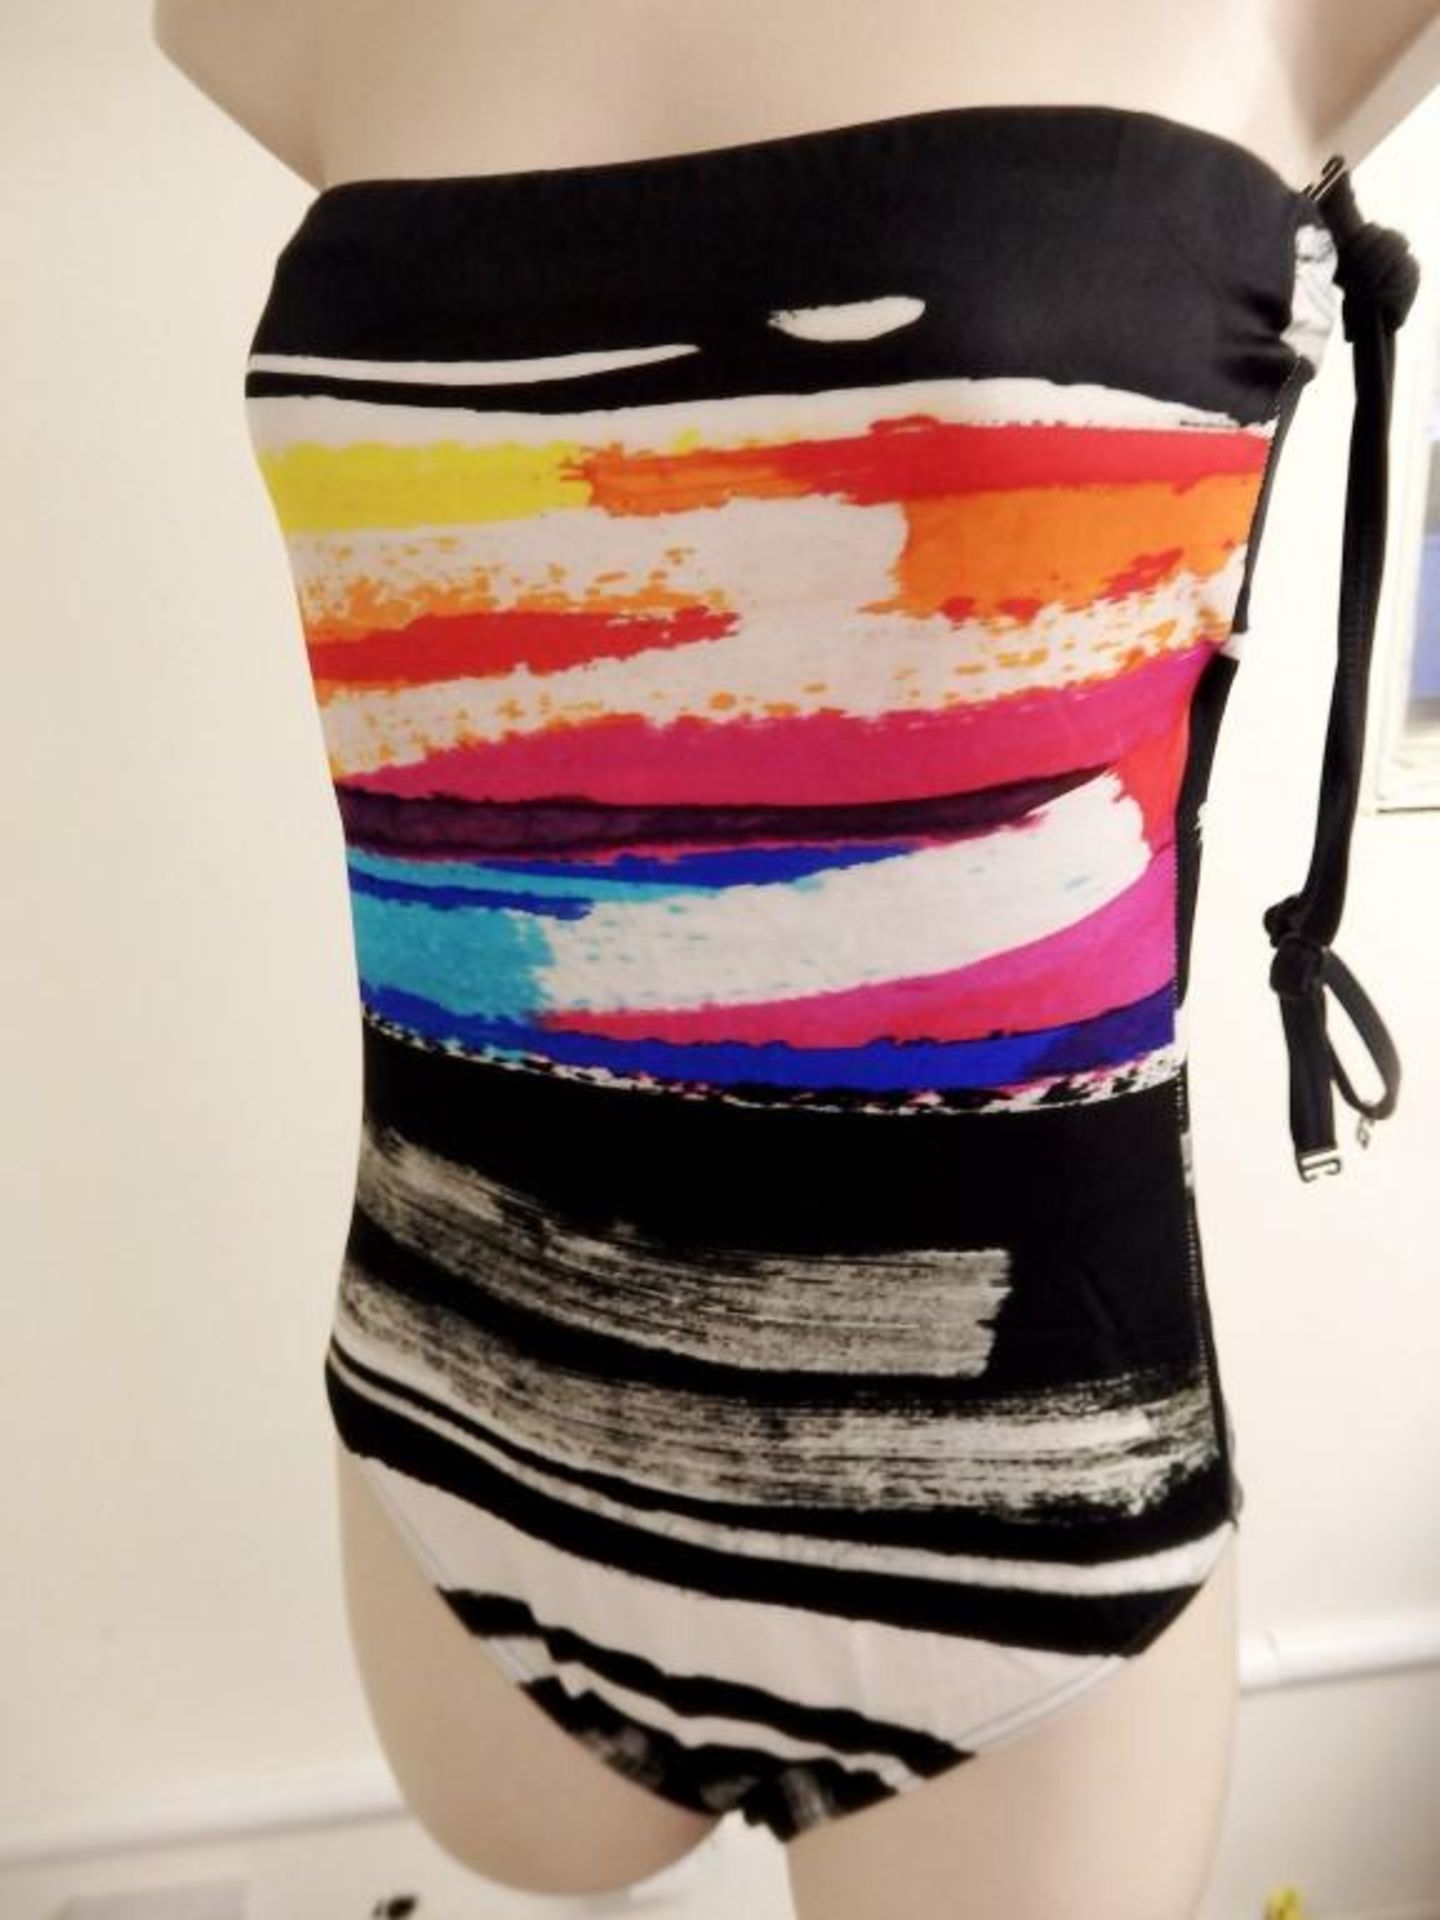 1 x Rasurel - Black/Ecru and vibrant patternedbustier - Cuba Swimsuit - R20738 - Size 2C - UK 32 - - Image 5 of 7